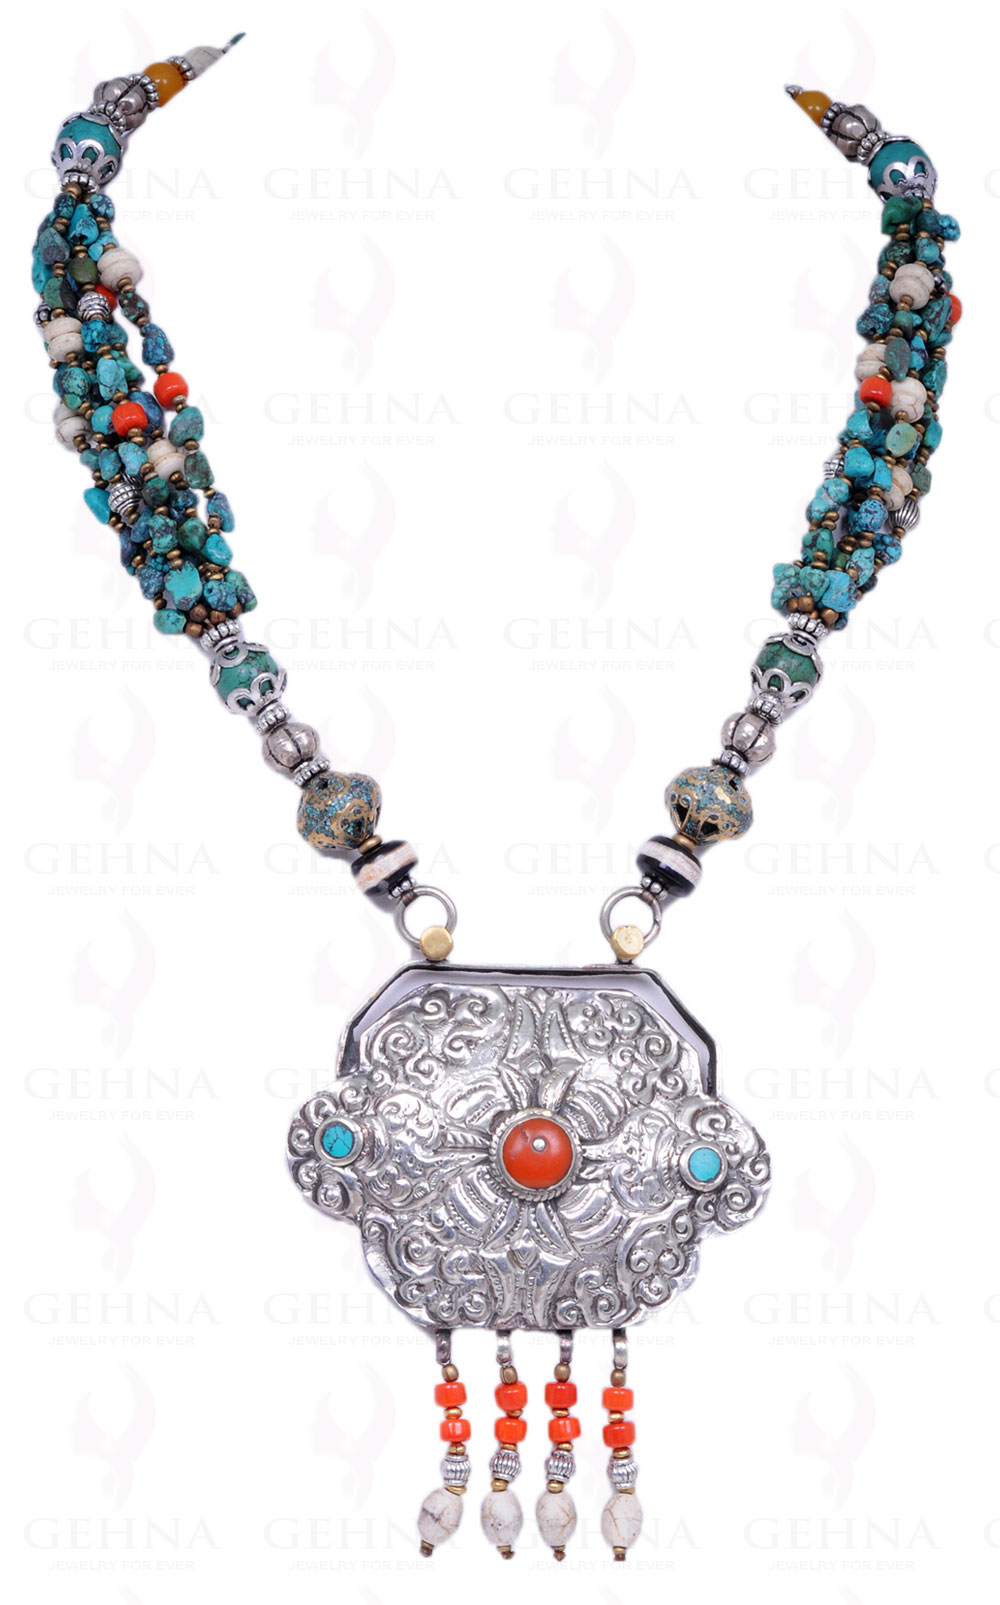 Mexican Silver Beads by Victoria; Circa 1950